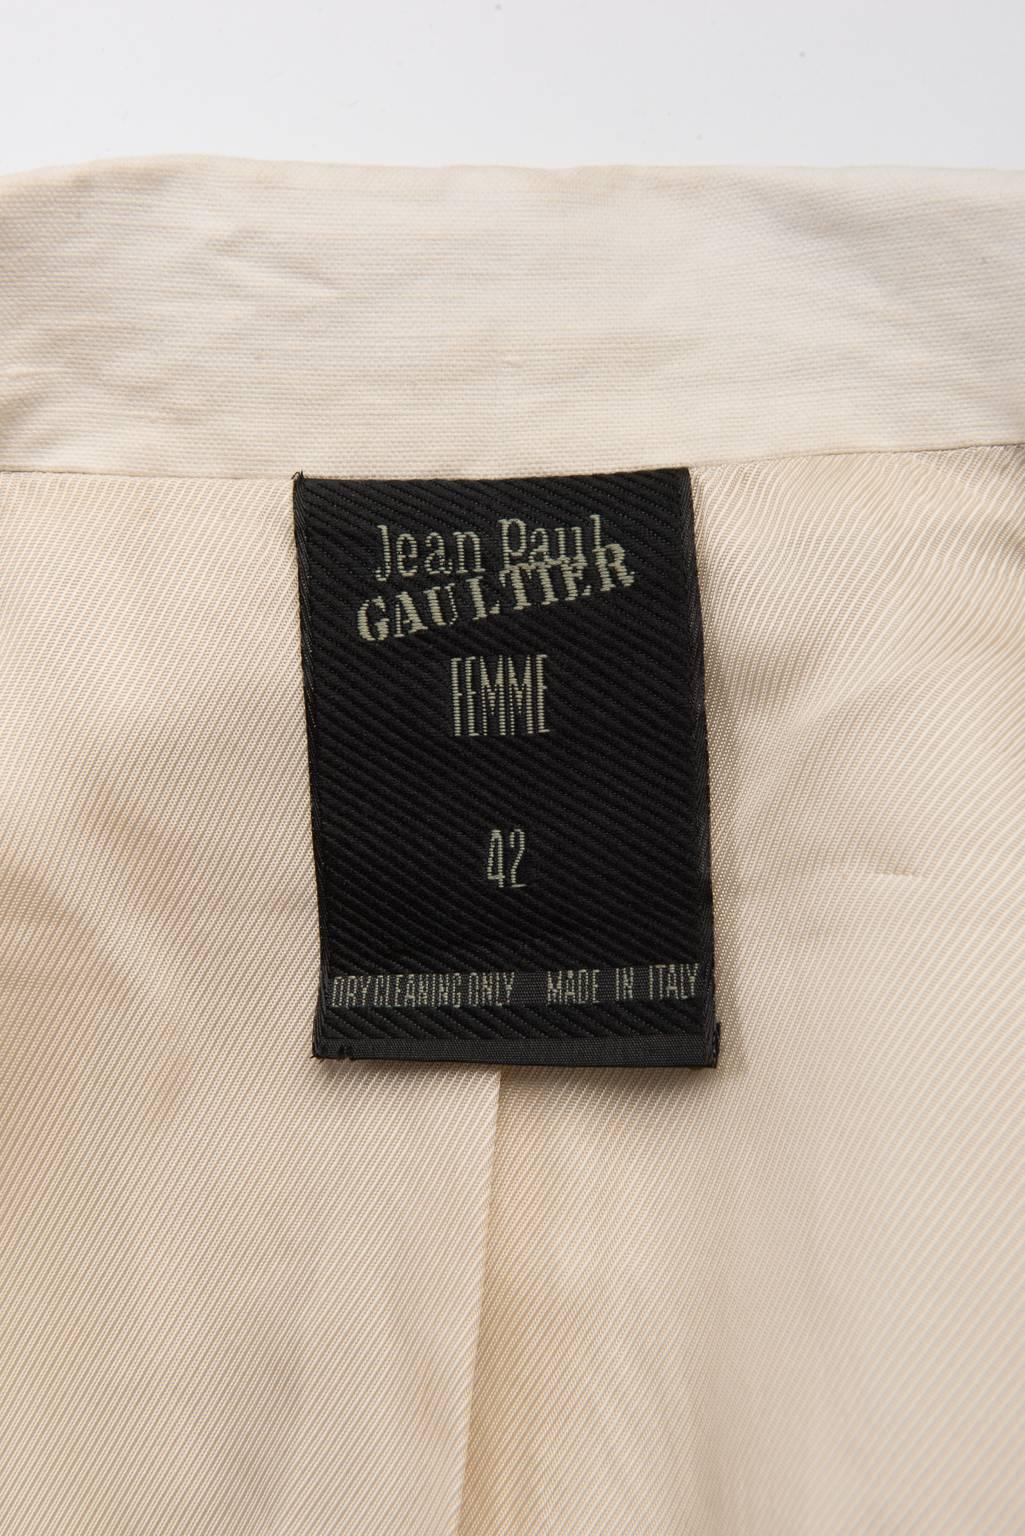 Jean Paul Gaultier Strong Shoulder Jacket For Sale 4